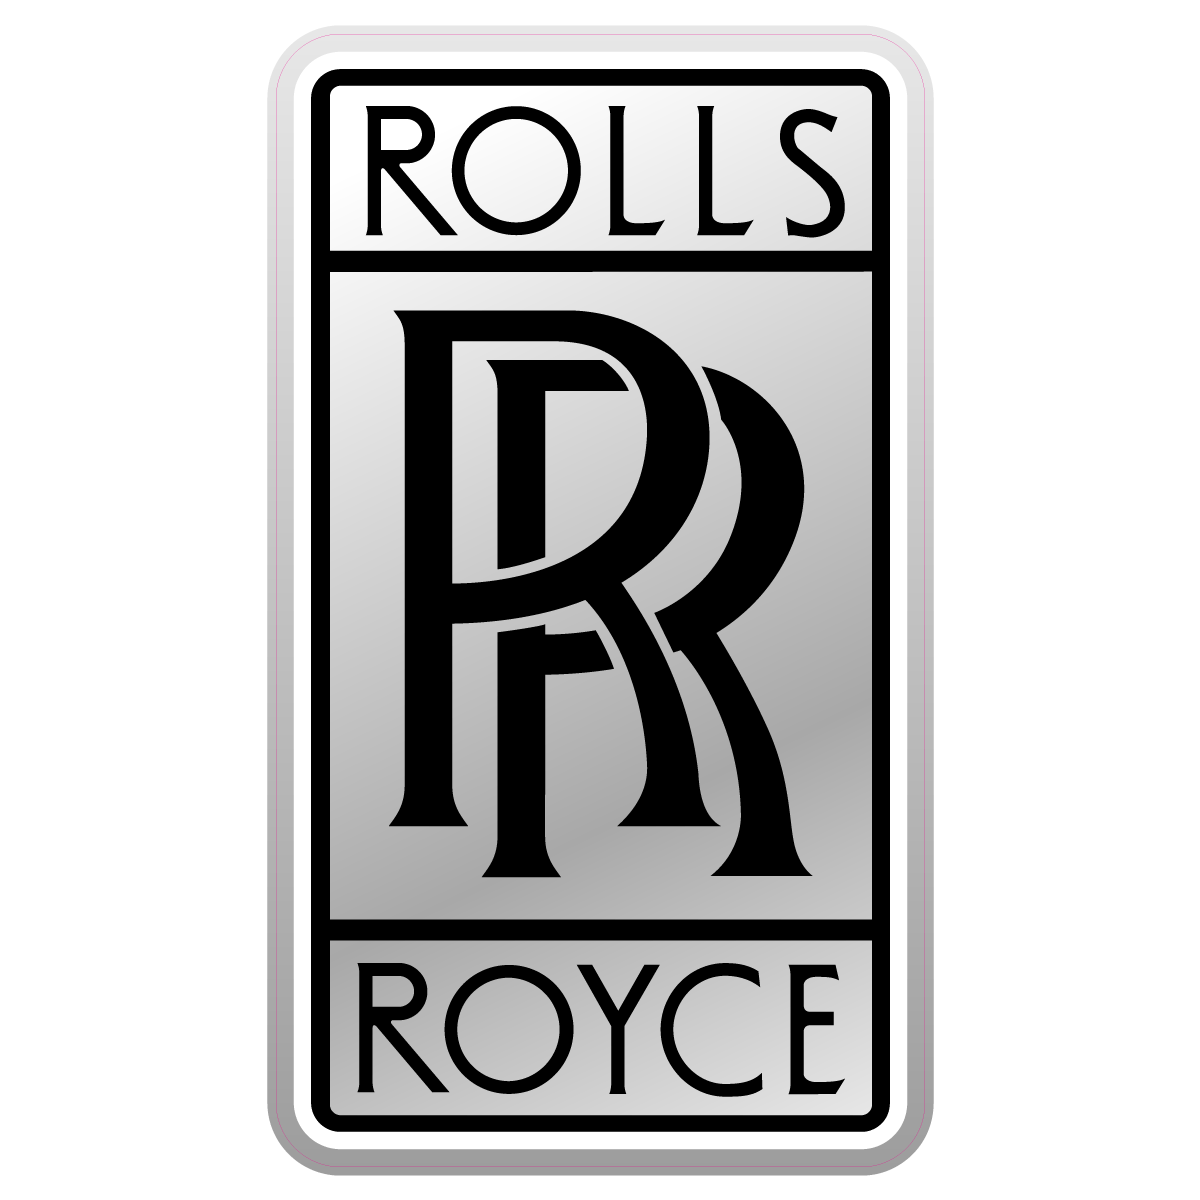 Rolls-Royce Logo - Rolls Royce Car Logo PNG Image - PurePNG | Free transparent CC0 PNG ...